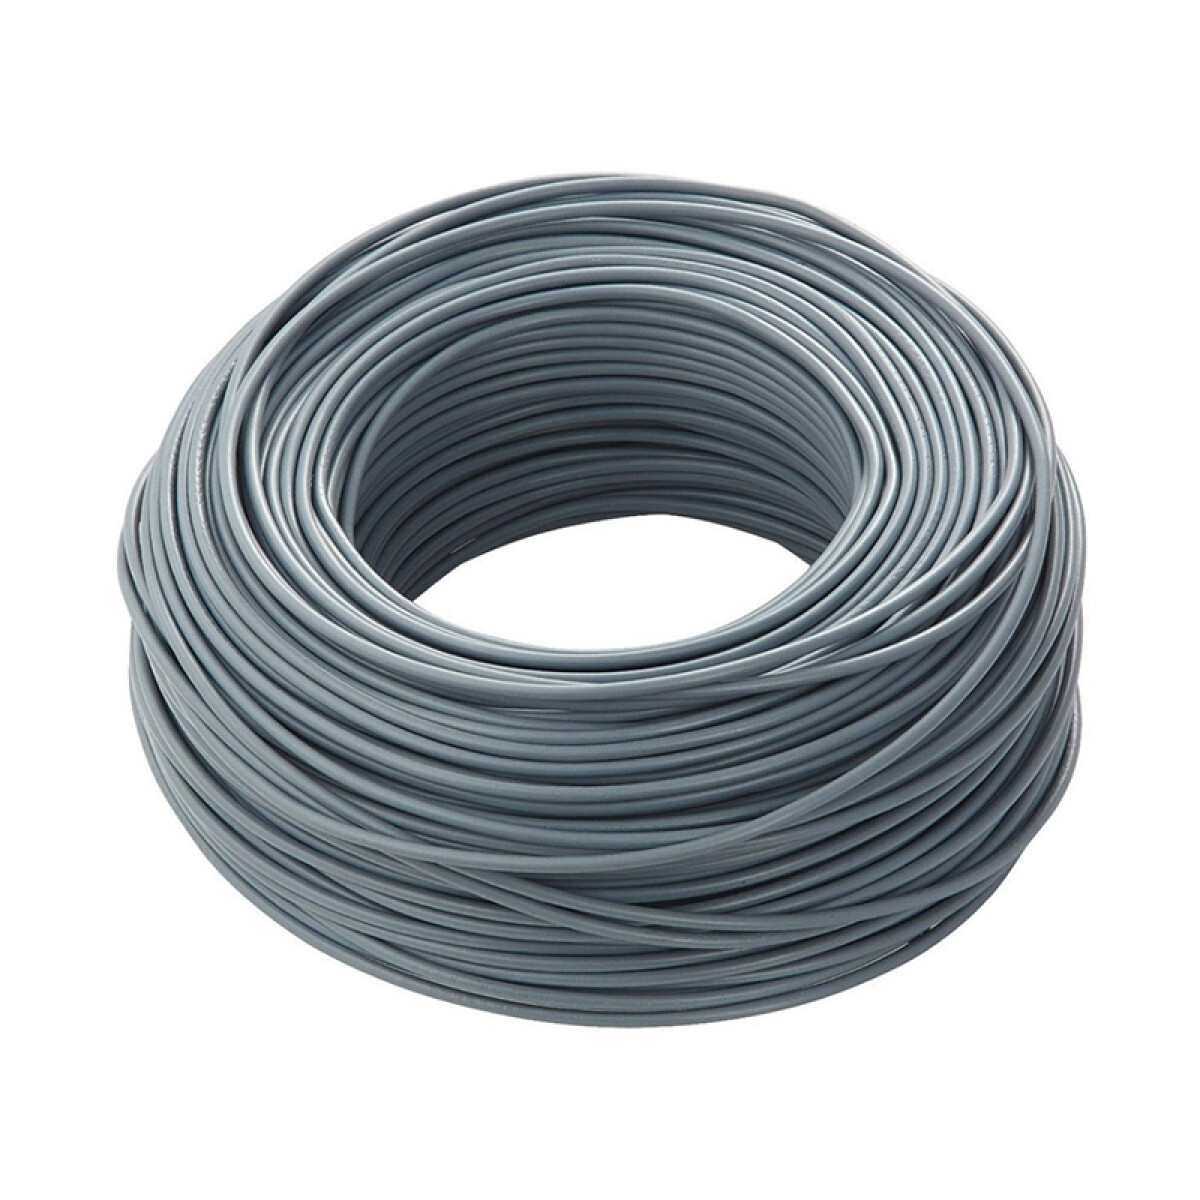 Cable bajo plástico gris 3x2,5mm² c/t. a/v.-100mts - N04409 